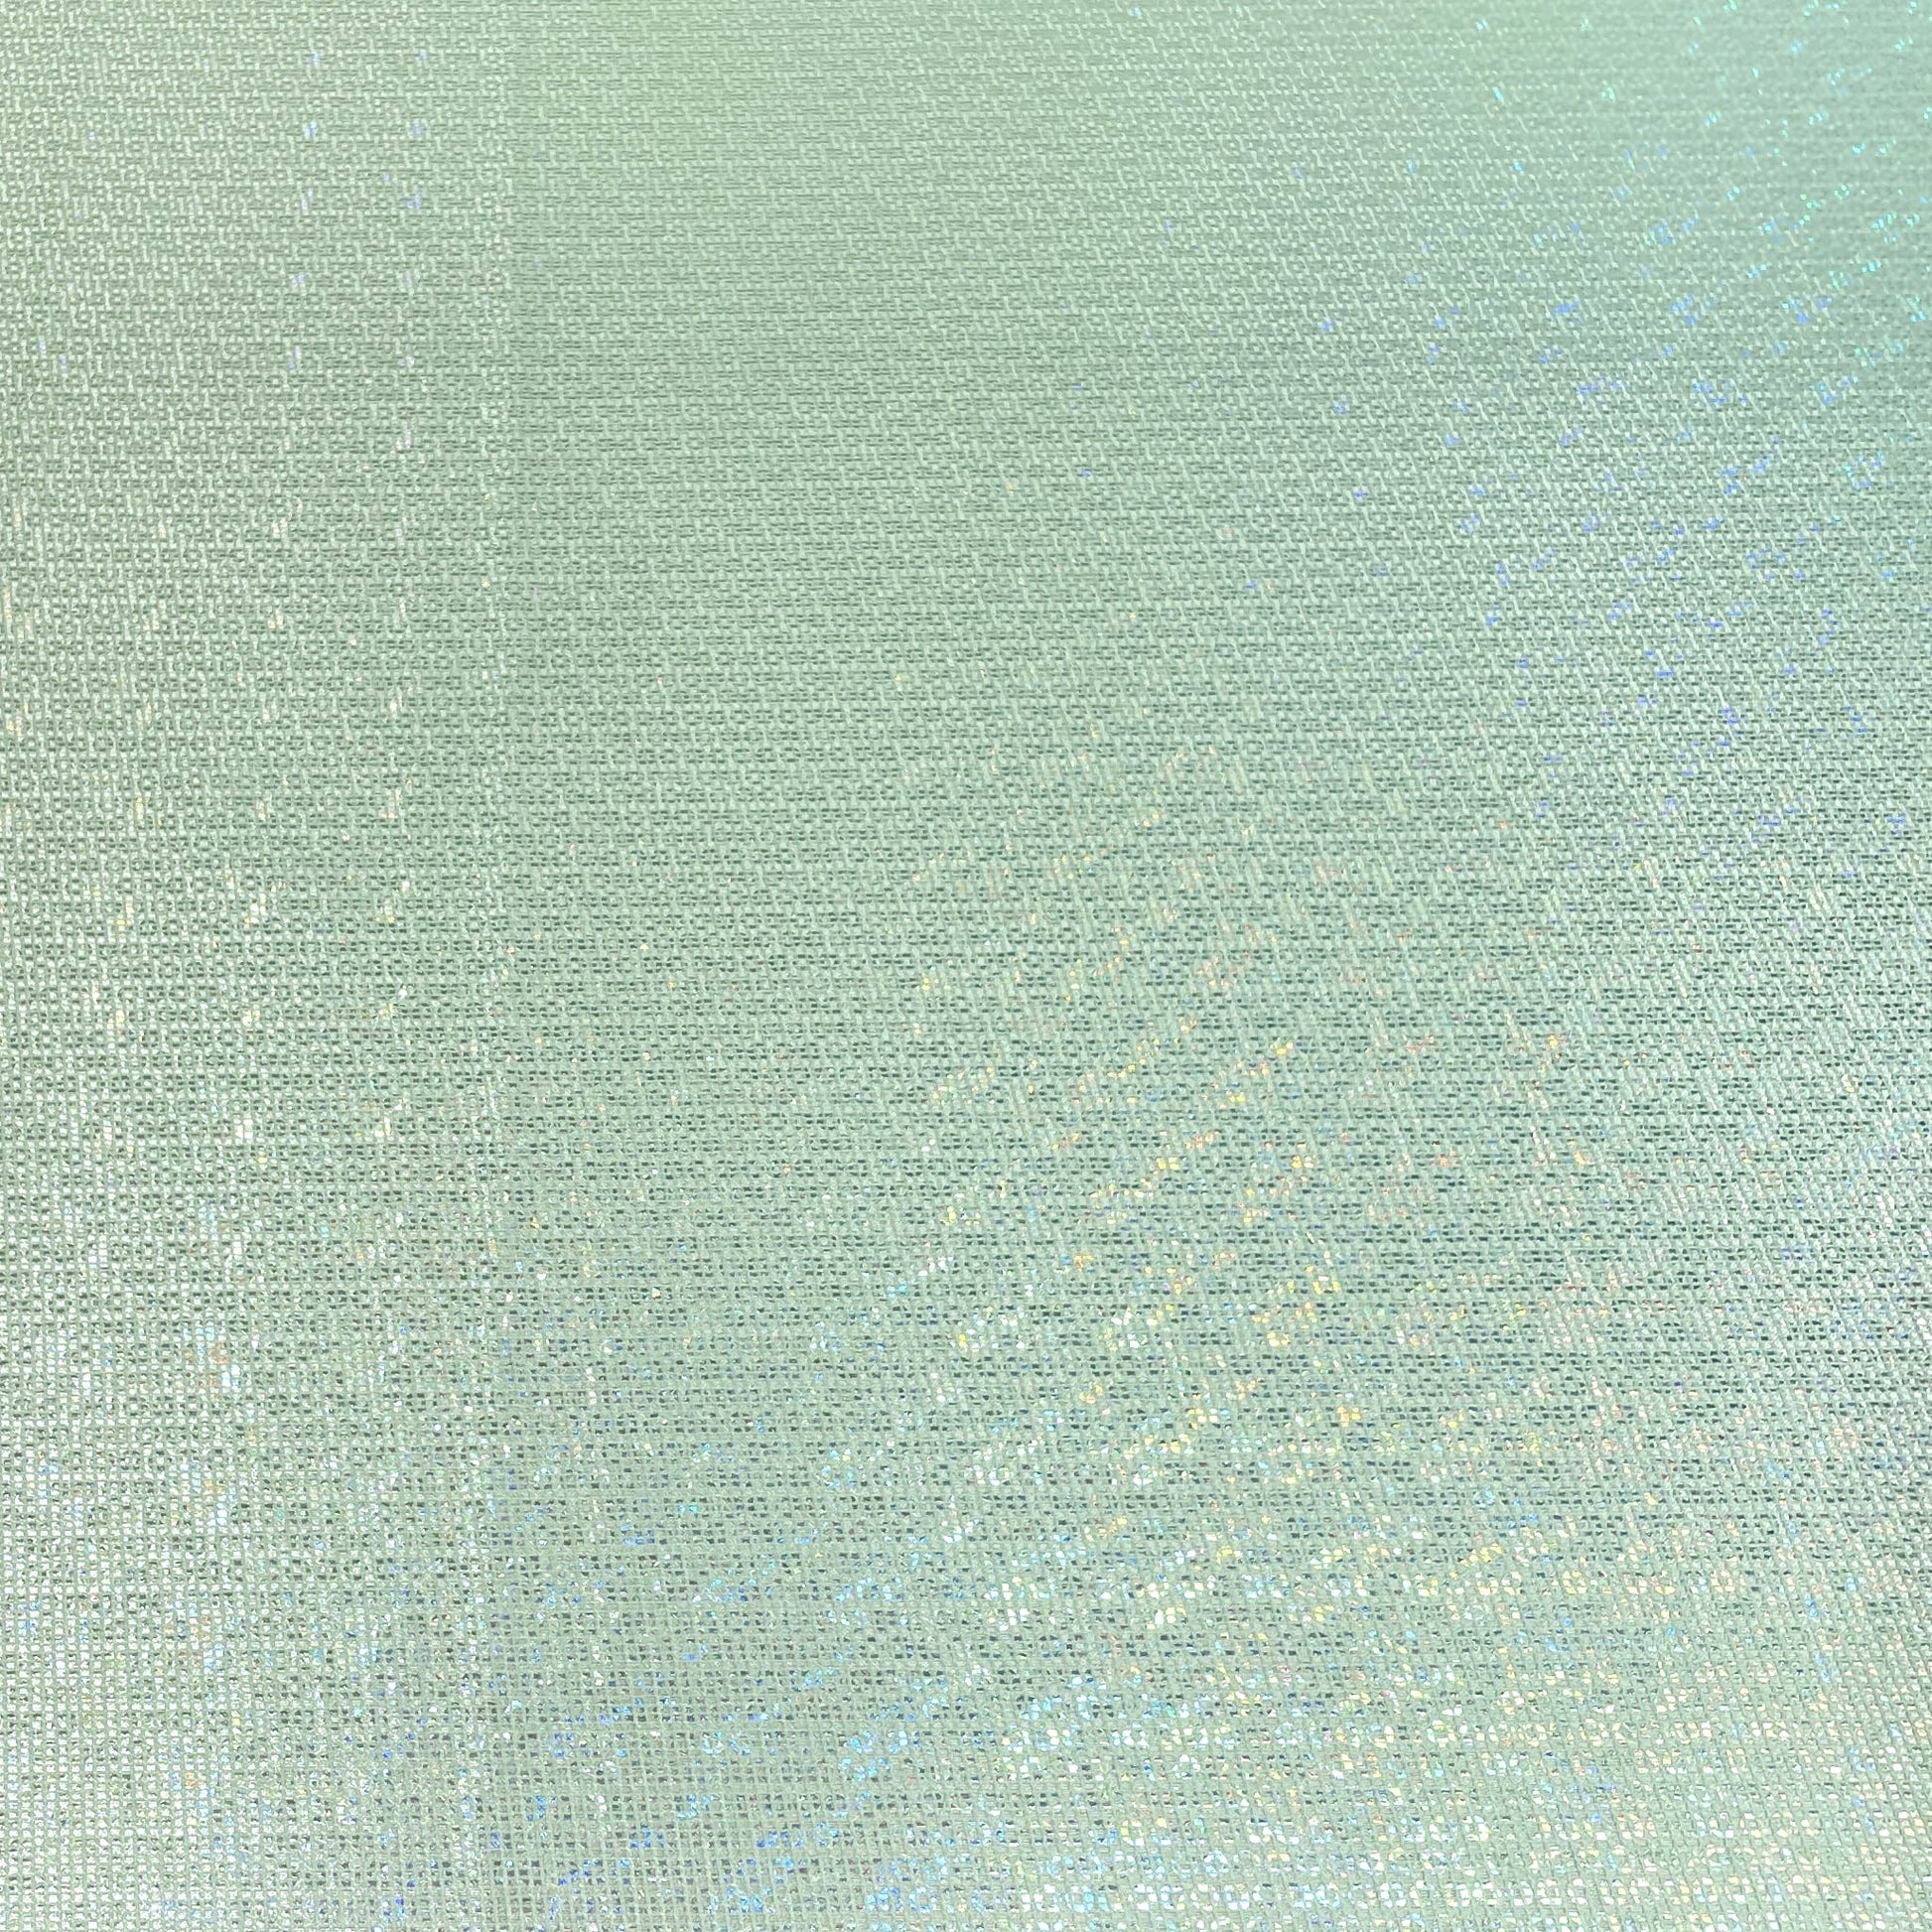 Premium Mint Green Gold Lurex Embossed Satin Fabric